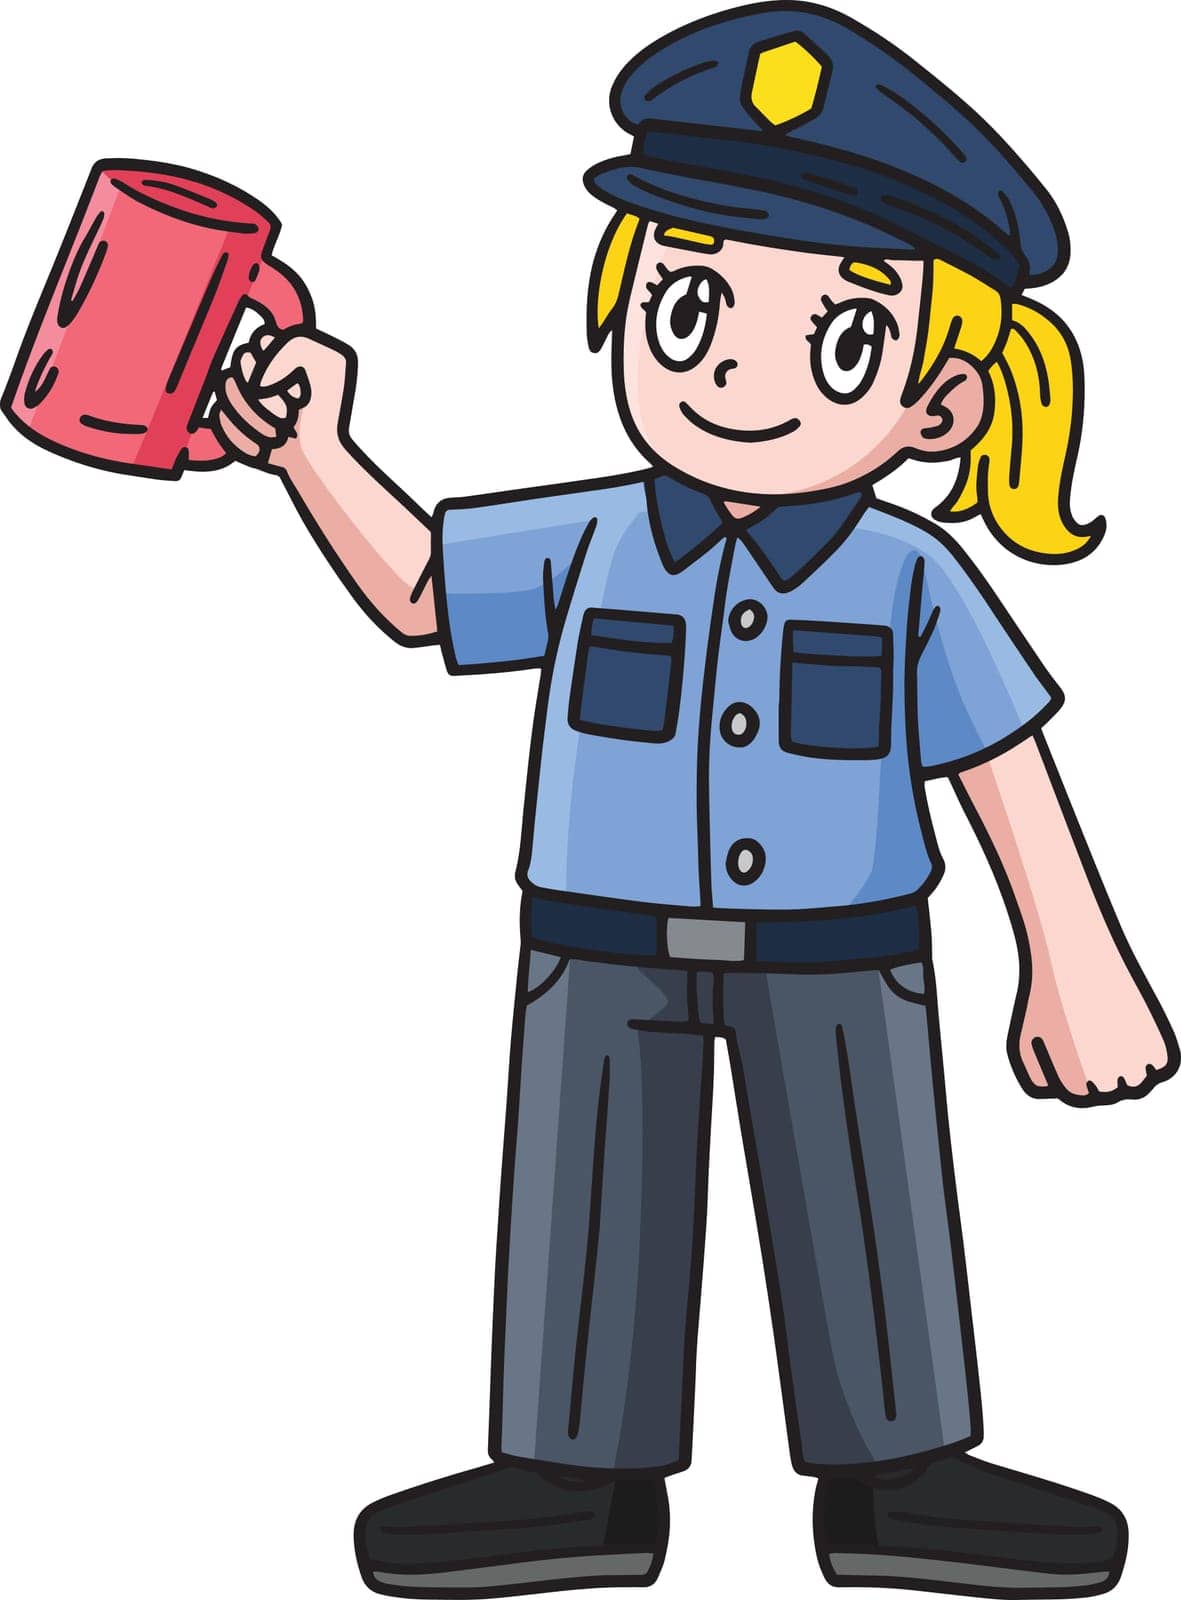 Policewoman Holding Mug Cartoon Colored Clipart by abbydesign